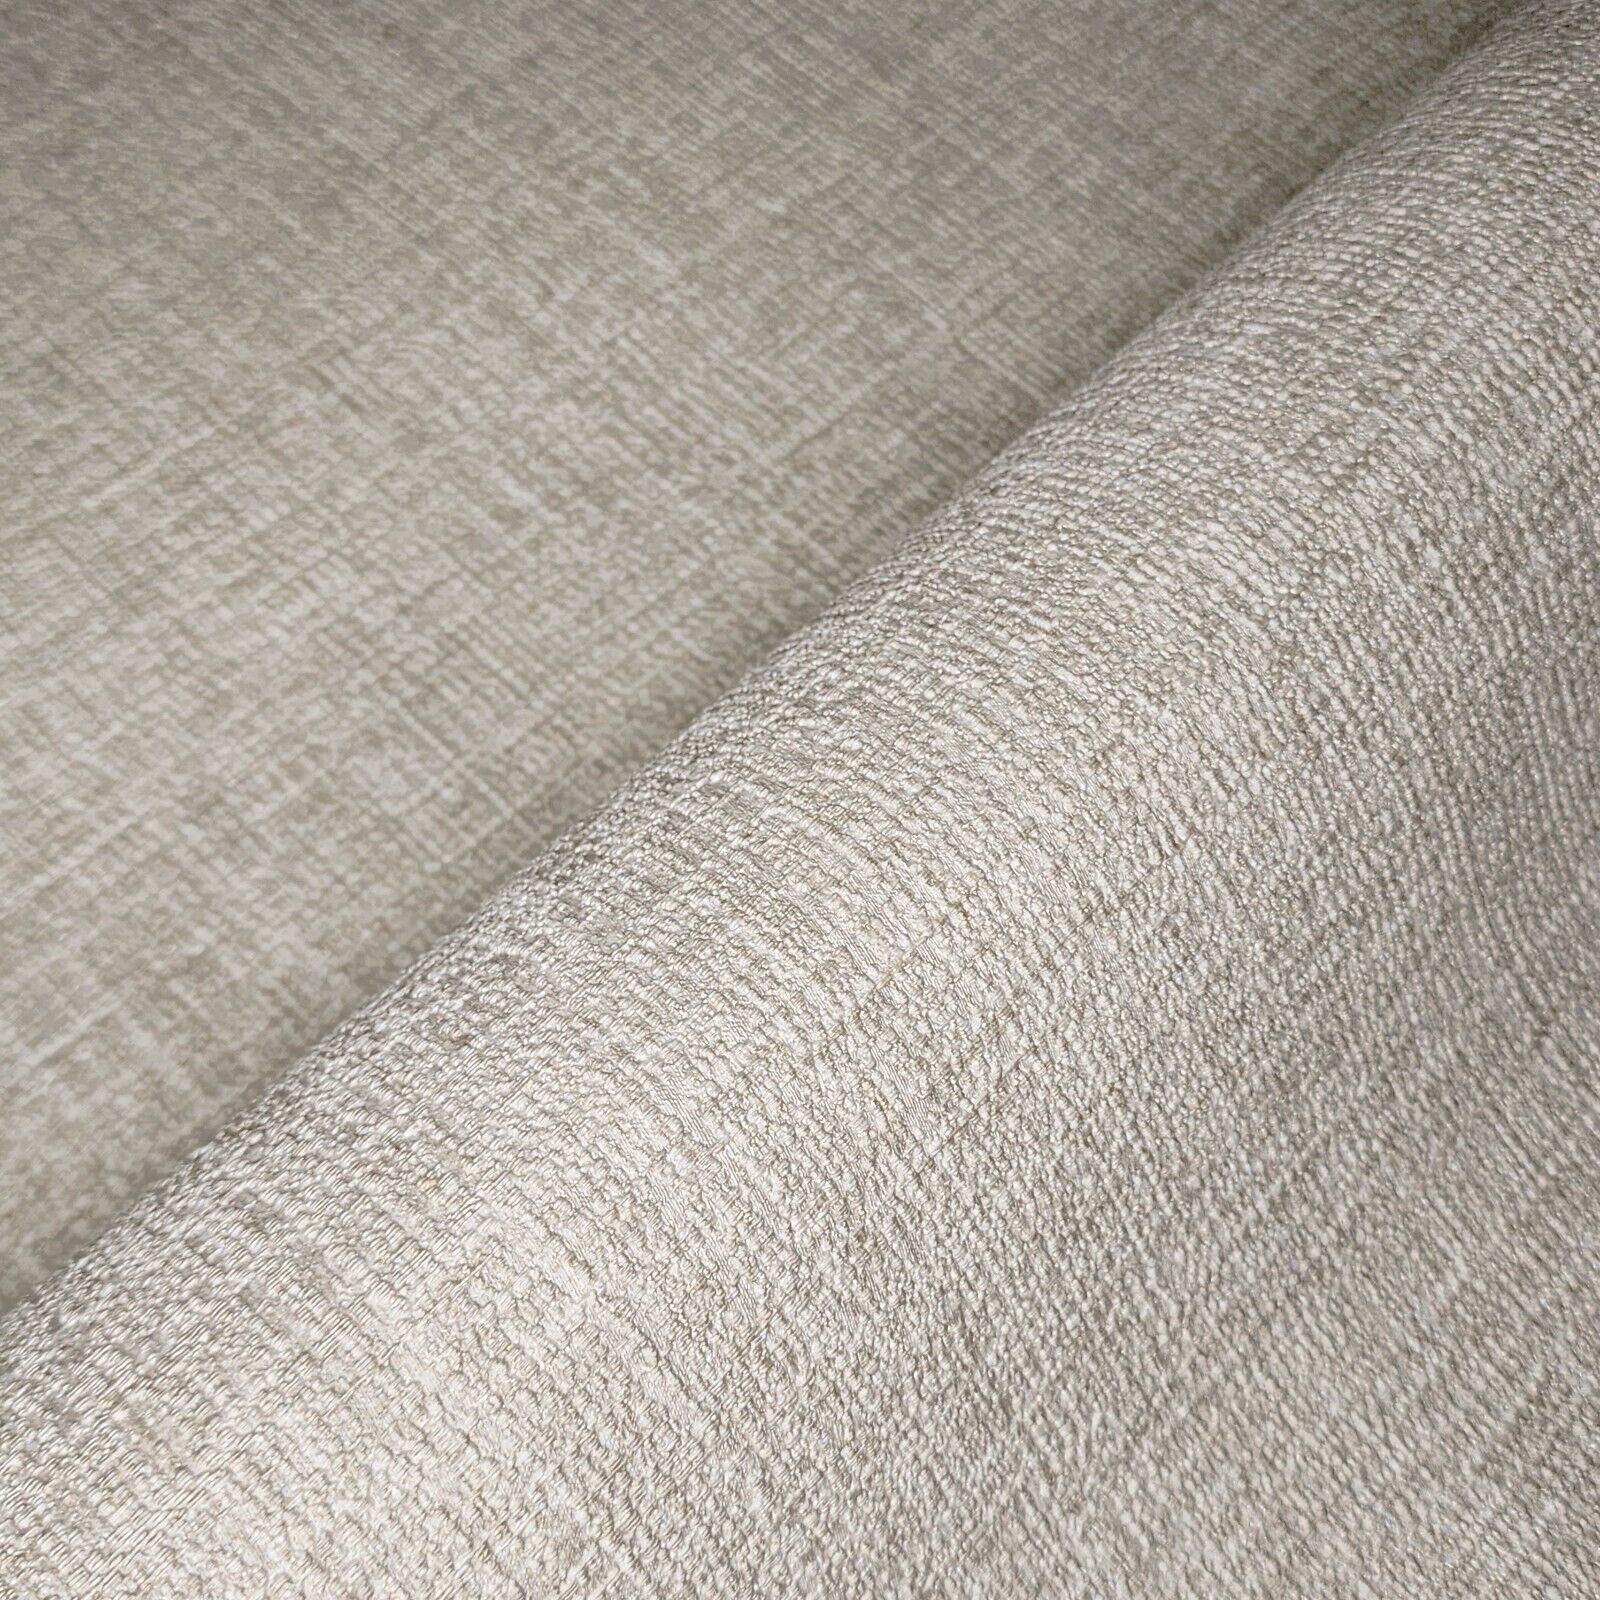 Z44955 Tan Beige cream faux Sackcloth Woven fabric textured plain mode –  wallcoveringsmart